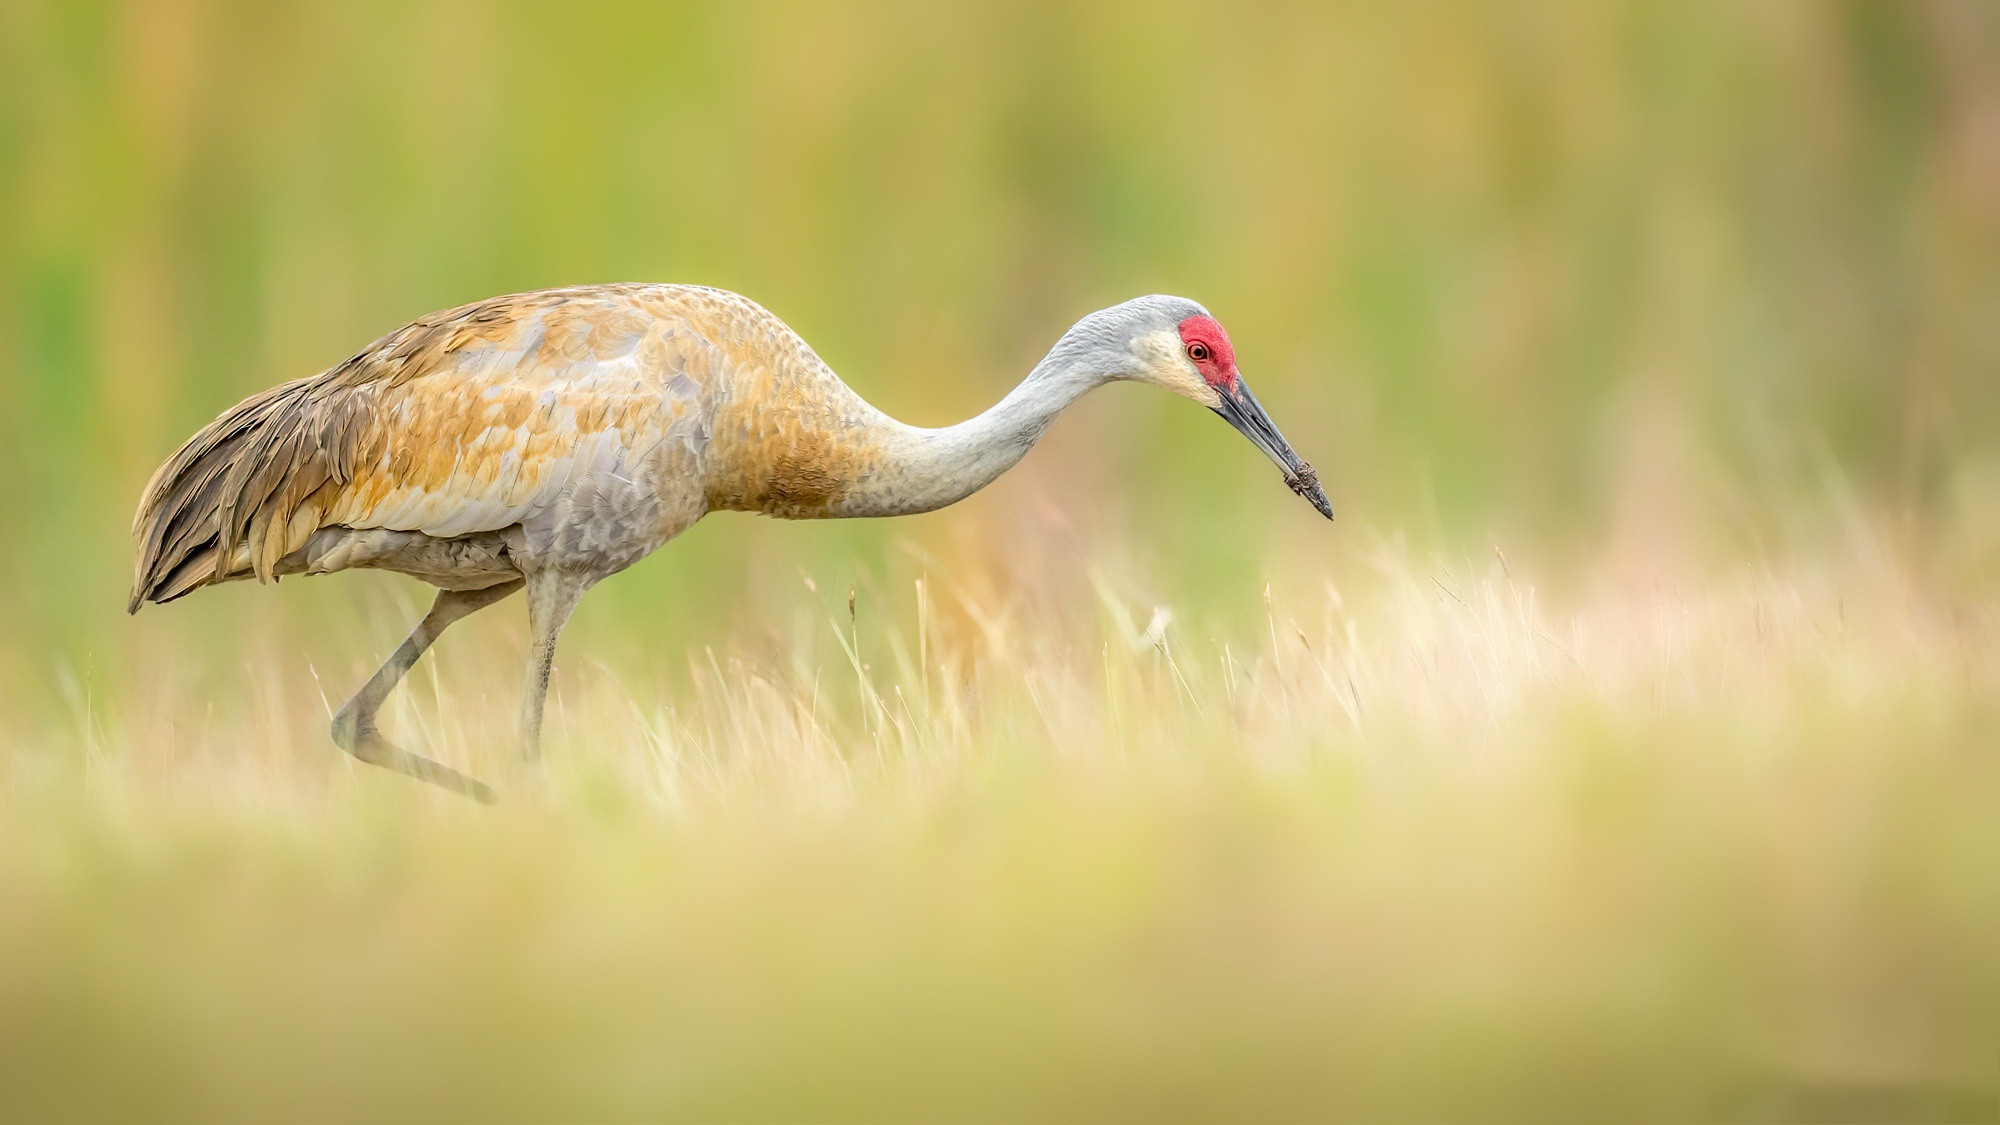 General 2000x1125 nature birds animals grass cranes (bird)